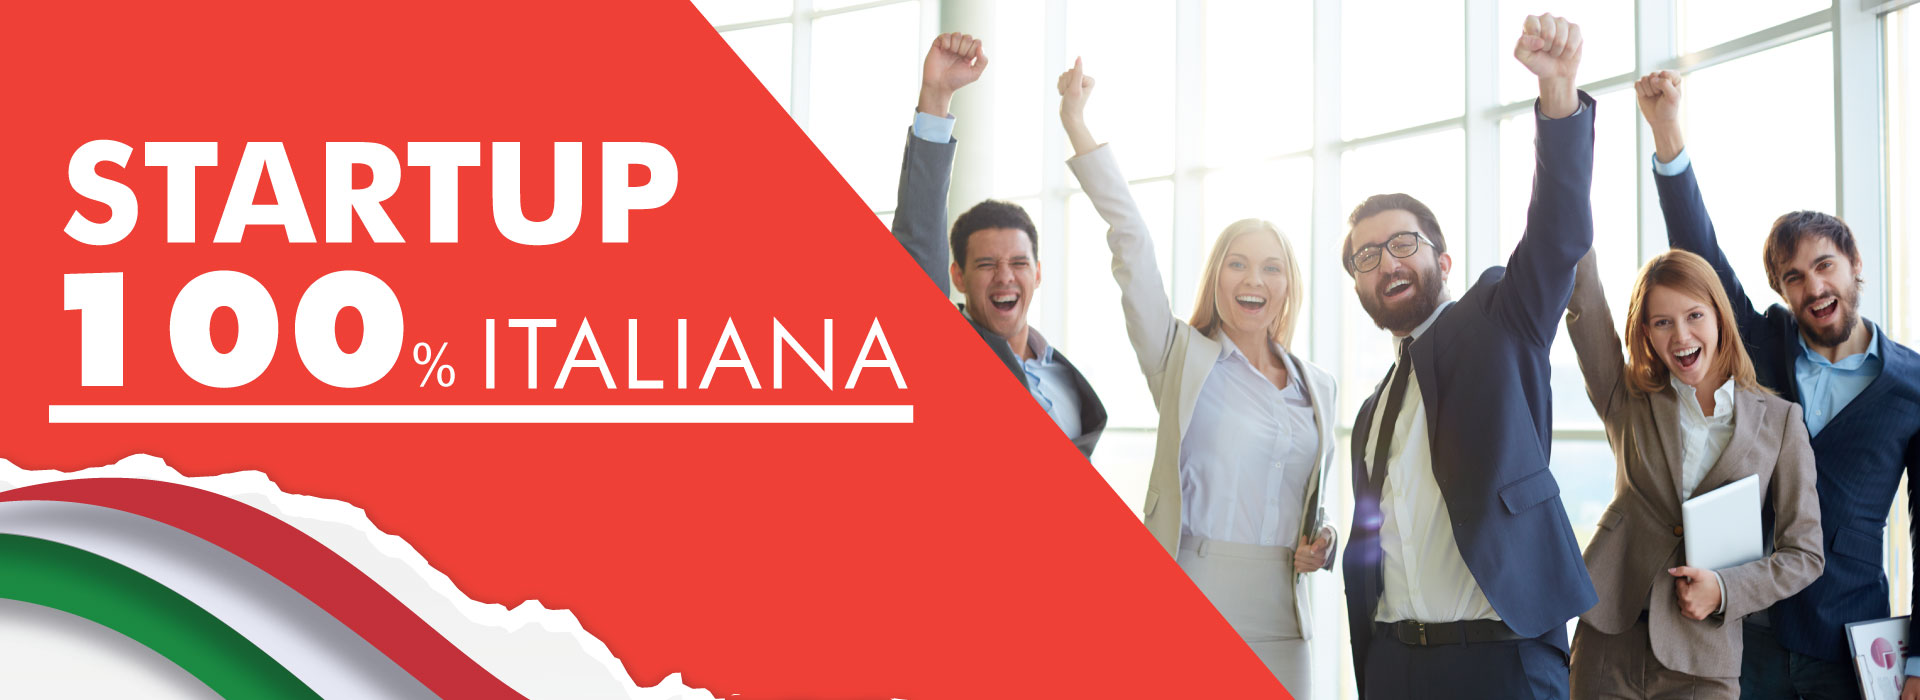 Startup Italiana